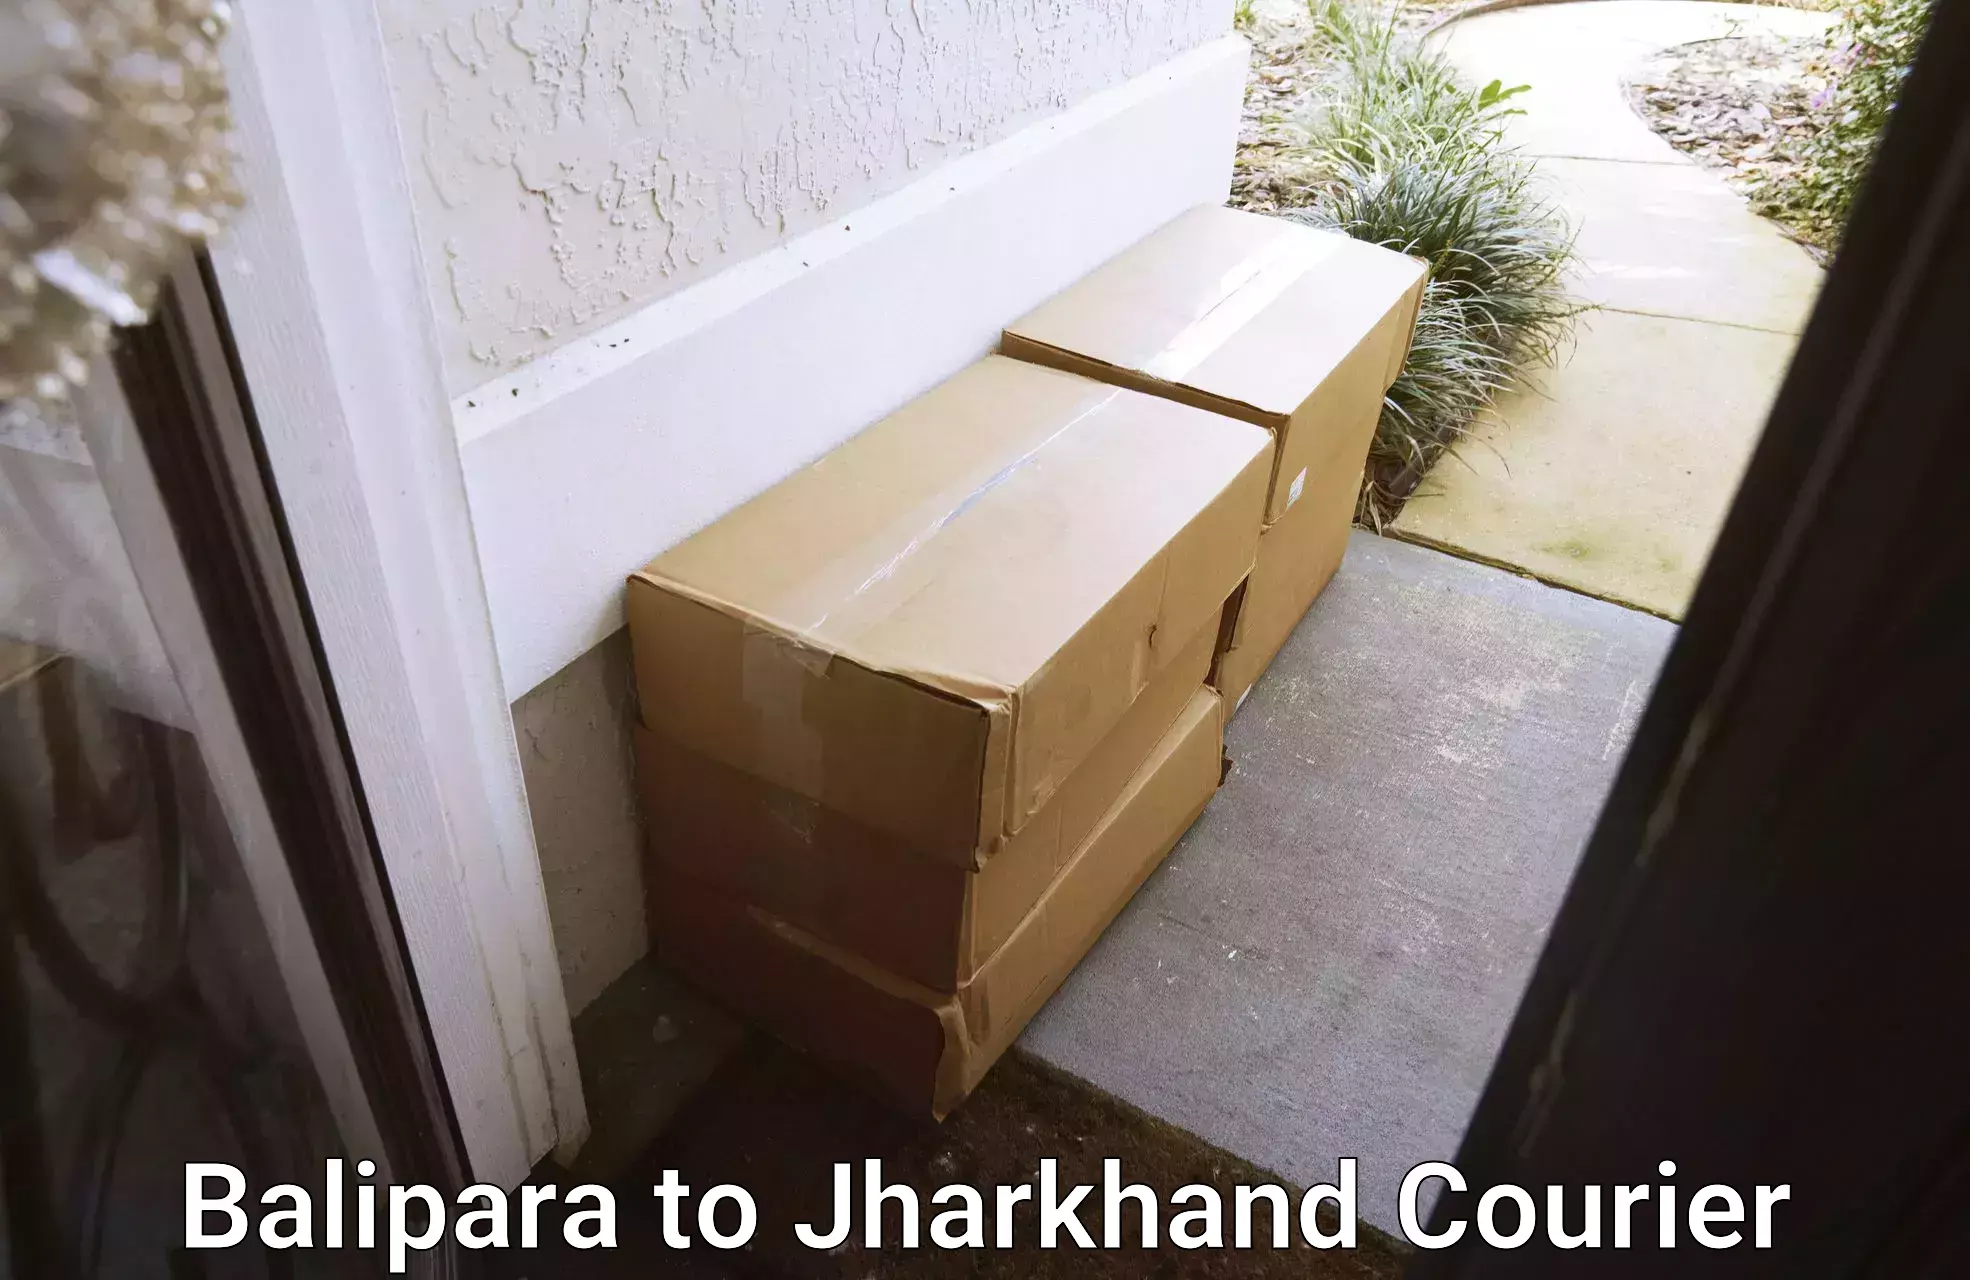 Efficient order fulfillment Balipara to Jharkhand